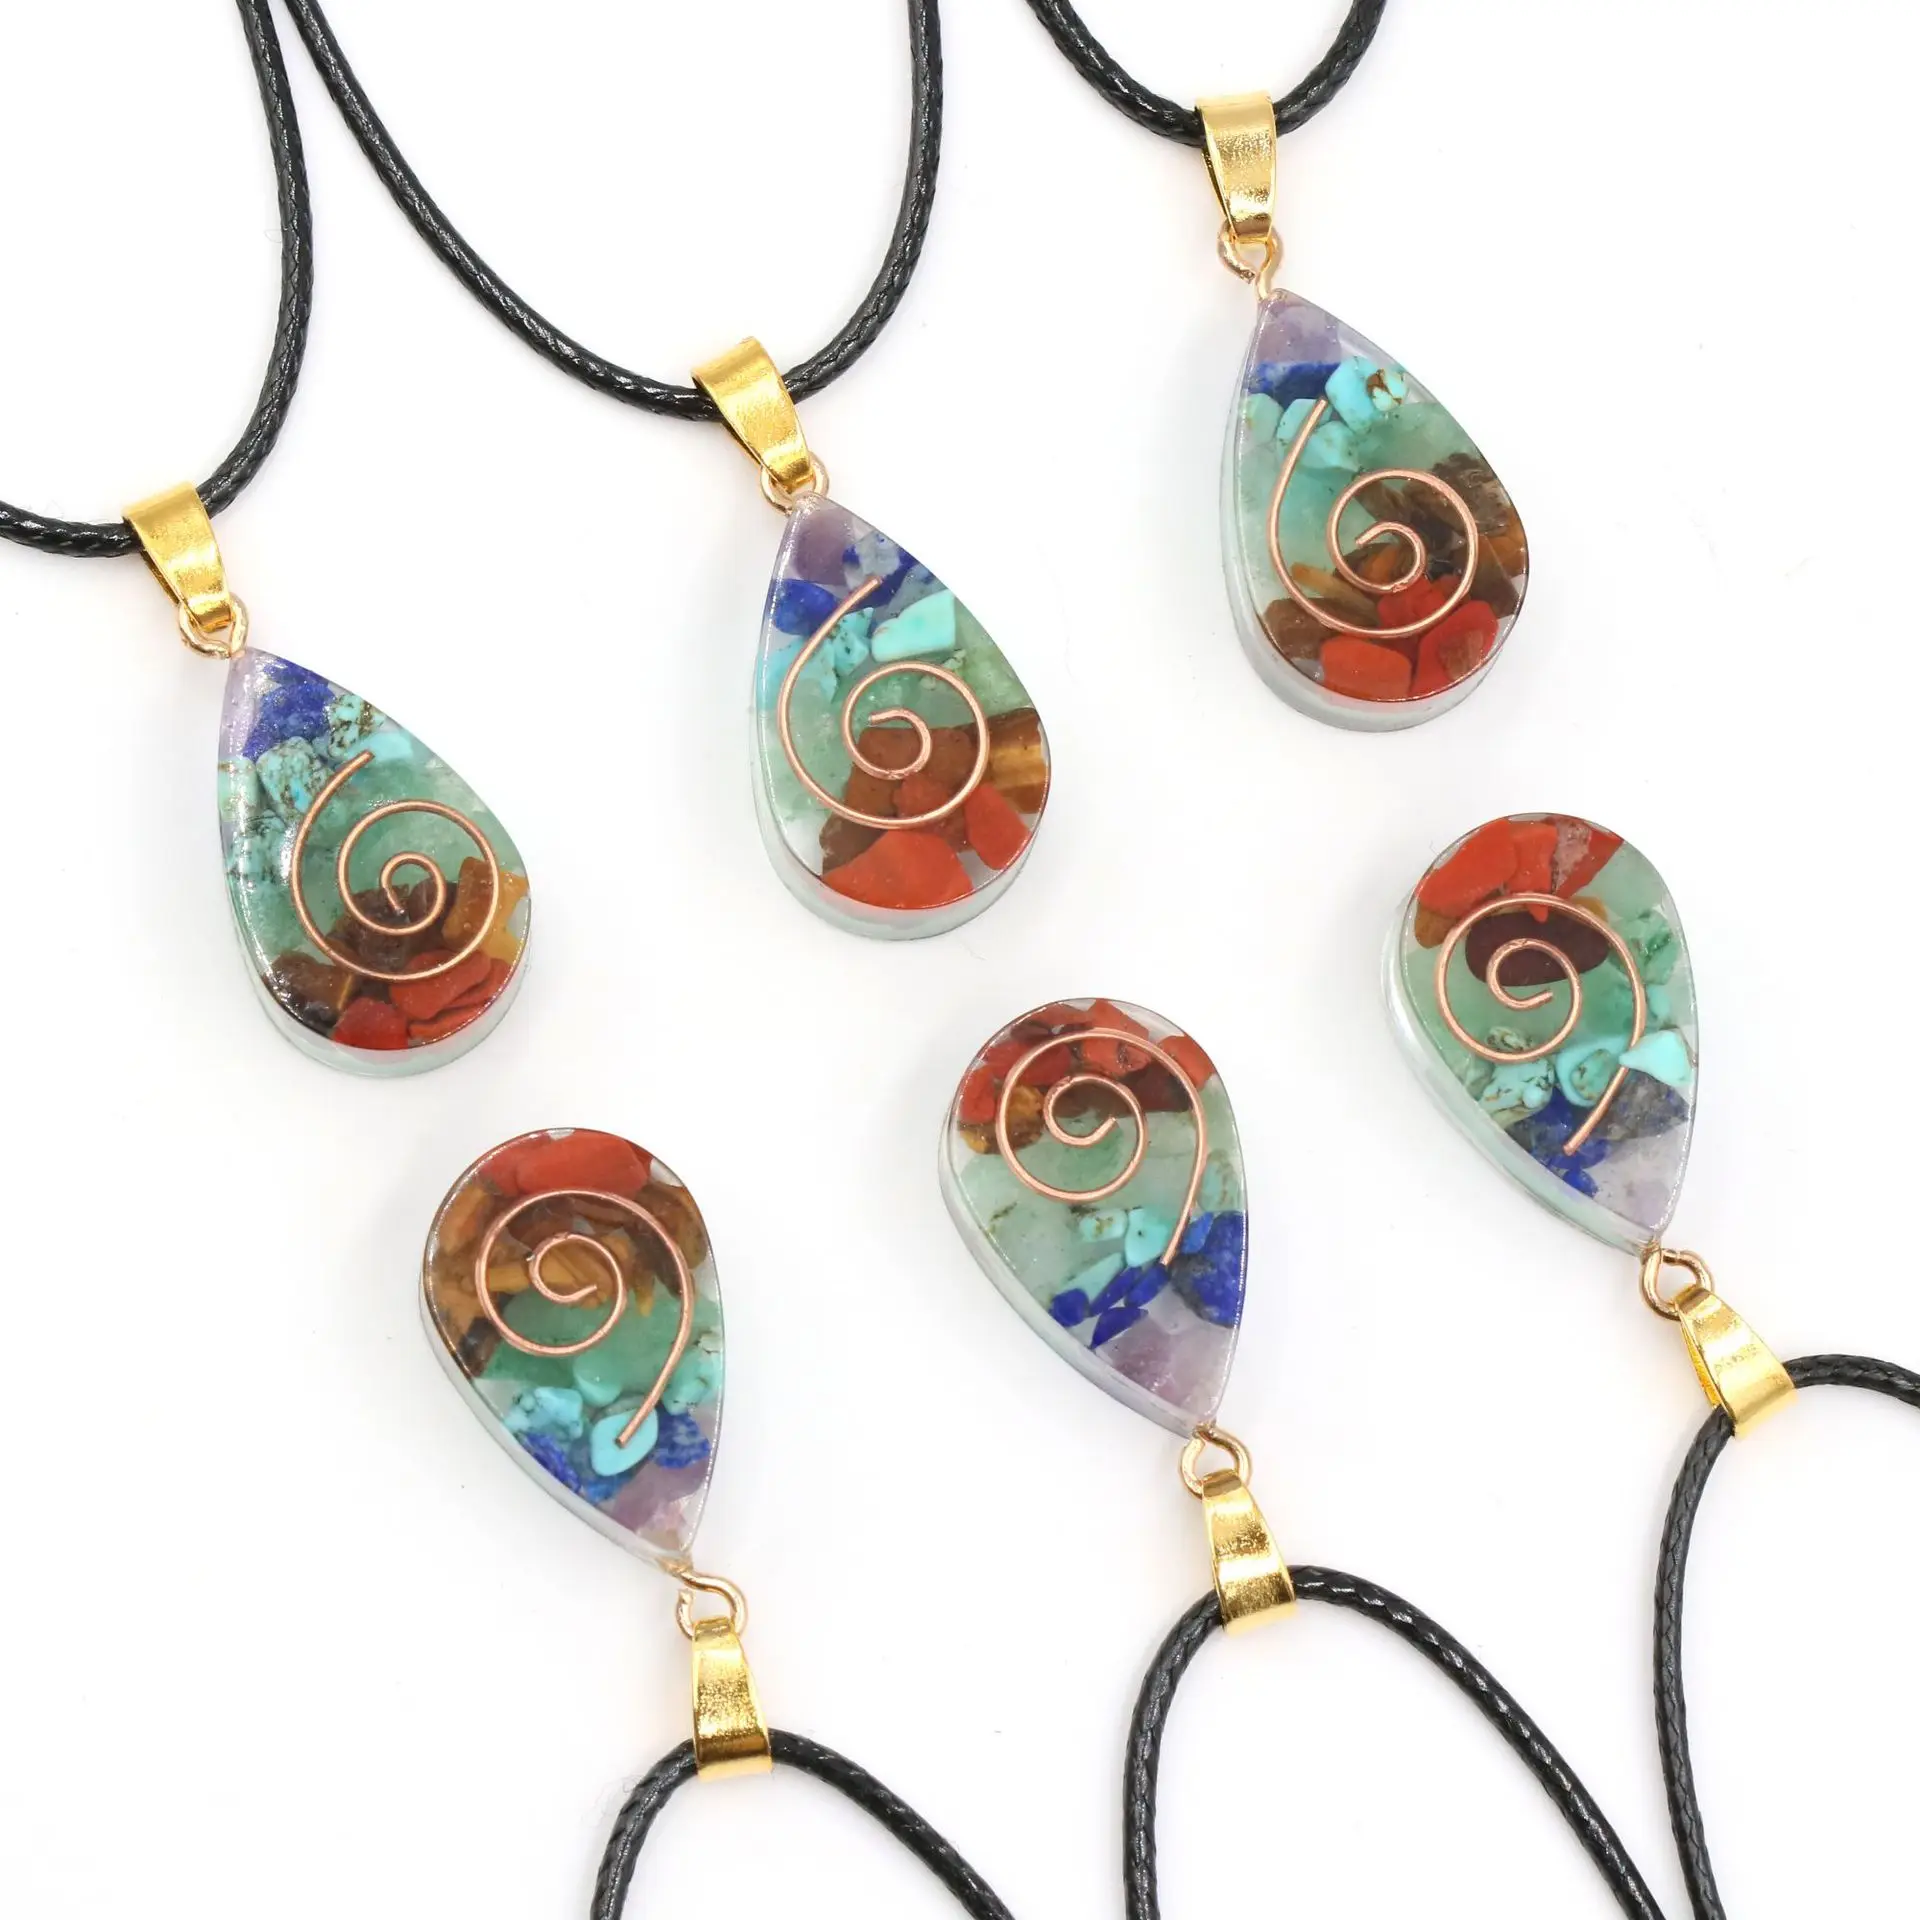 7 Chakra Orgonite Amulet Pendant Necklace Men Women Natural Reiki Healing  Energy Gemstones Necklace Yoga Meditation Jewelry Gift